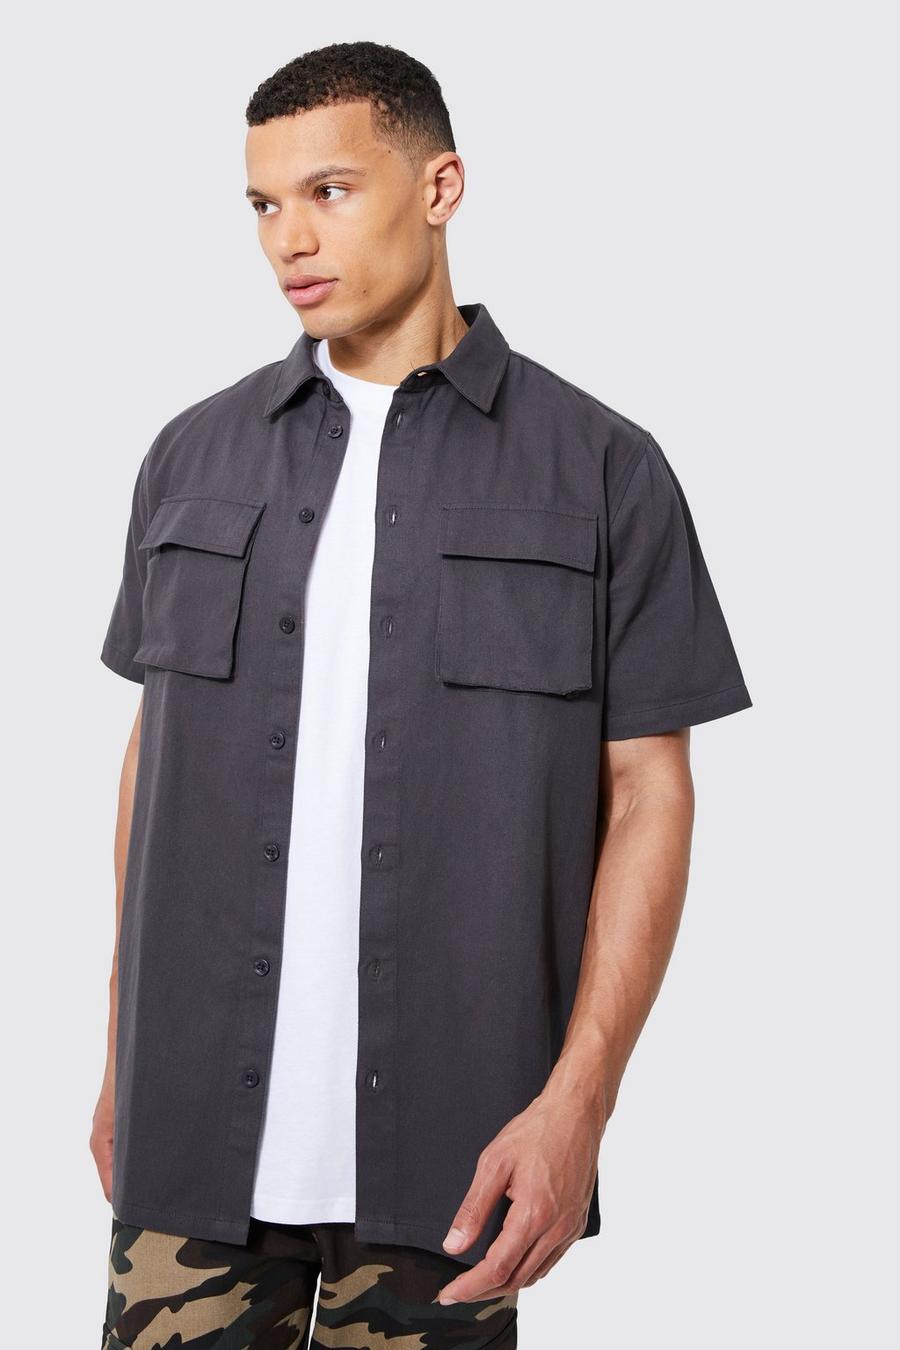 Charcoal grå Tall Short Sleeve Overshirt Utility Shirt